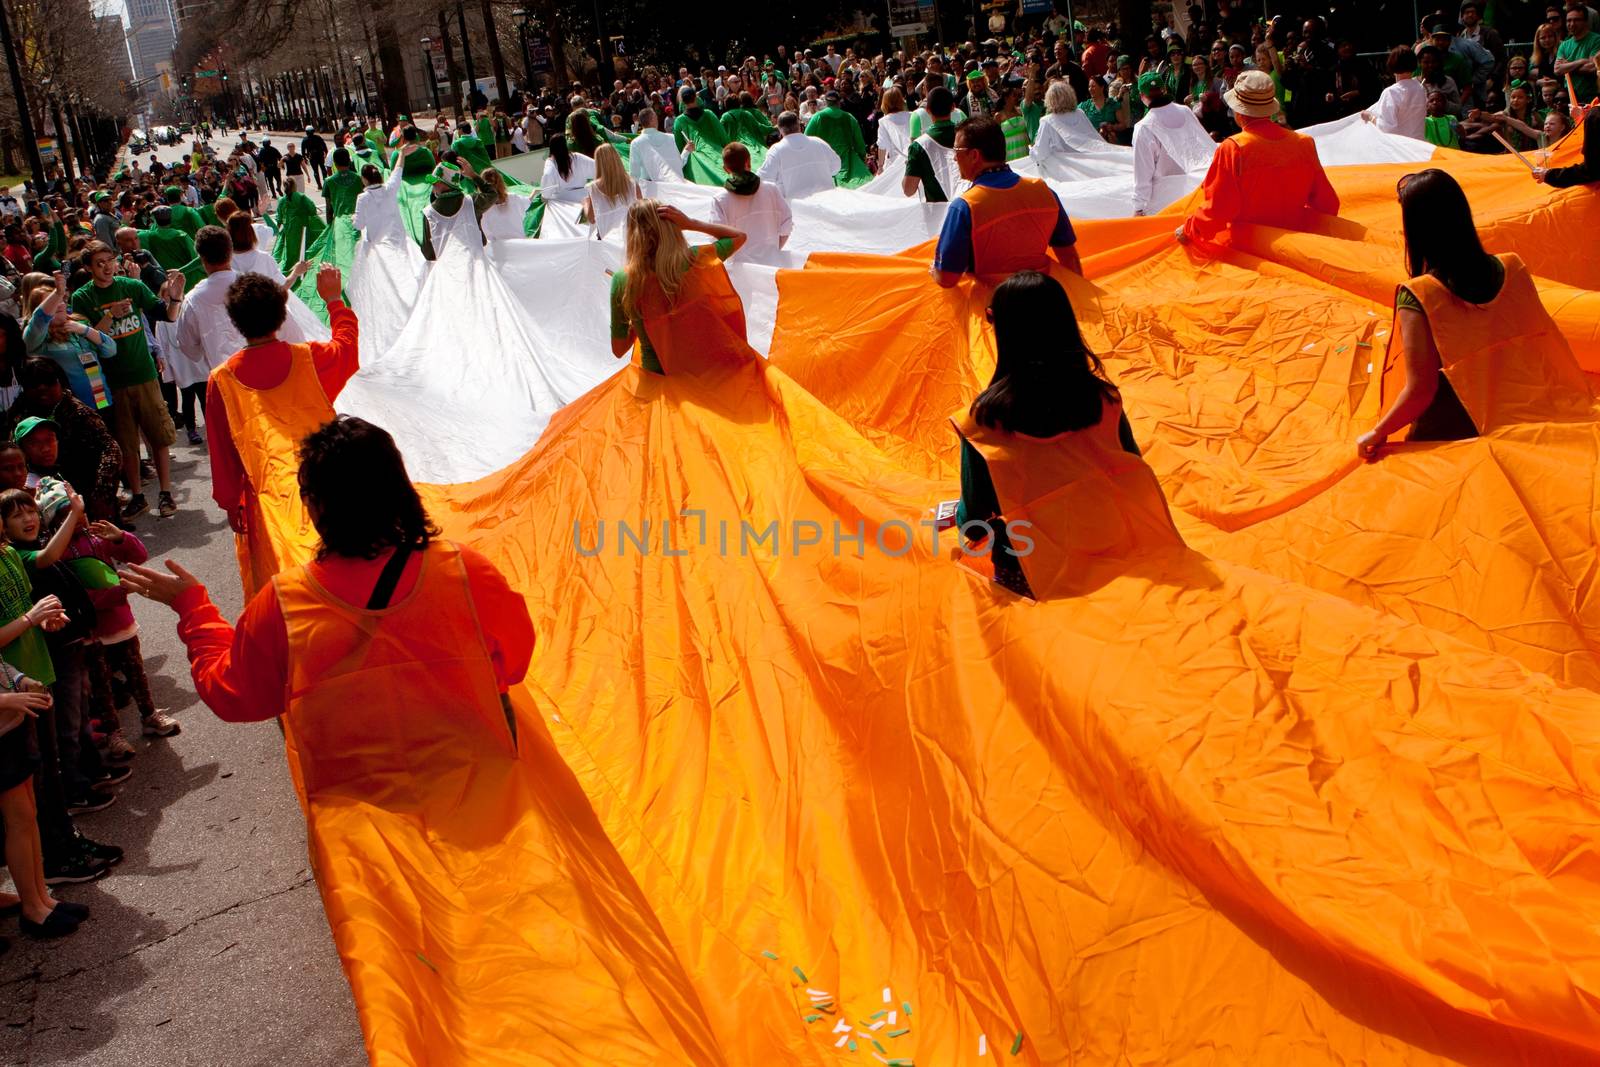 Human Flag Of Ireland Navigates Through Atlanta St. Patrick's Parade by BluIz60